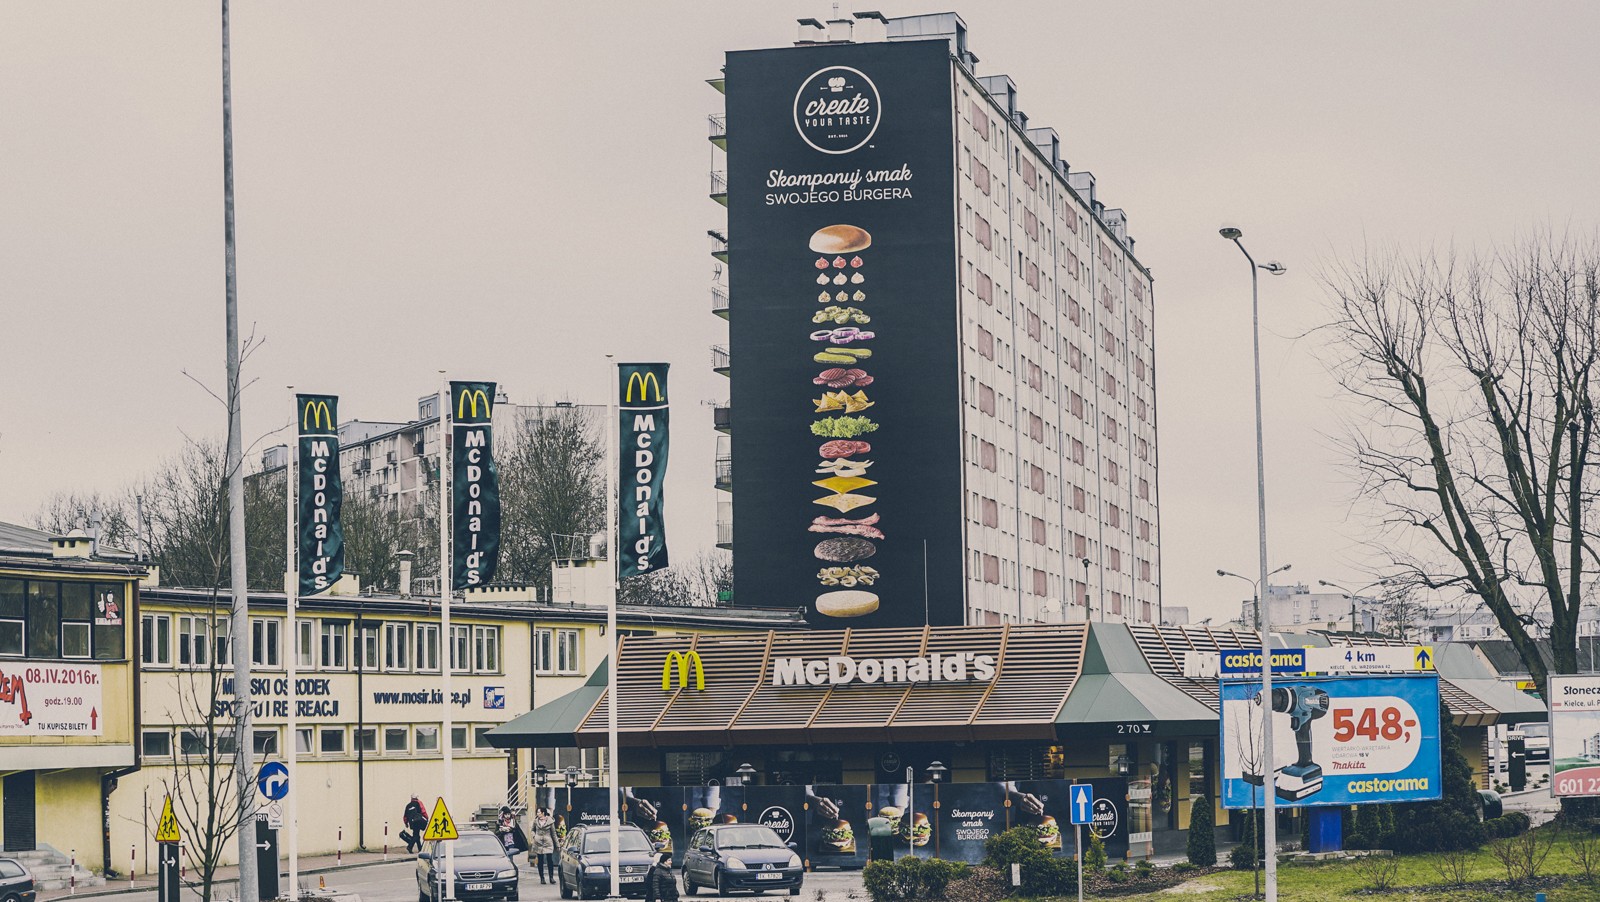 McDonald's mural for Create your taste advertising campaign on a building Karczowkowska street in Kielce | reklama muralowa dla McDonald's | Portfolio